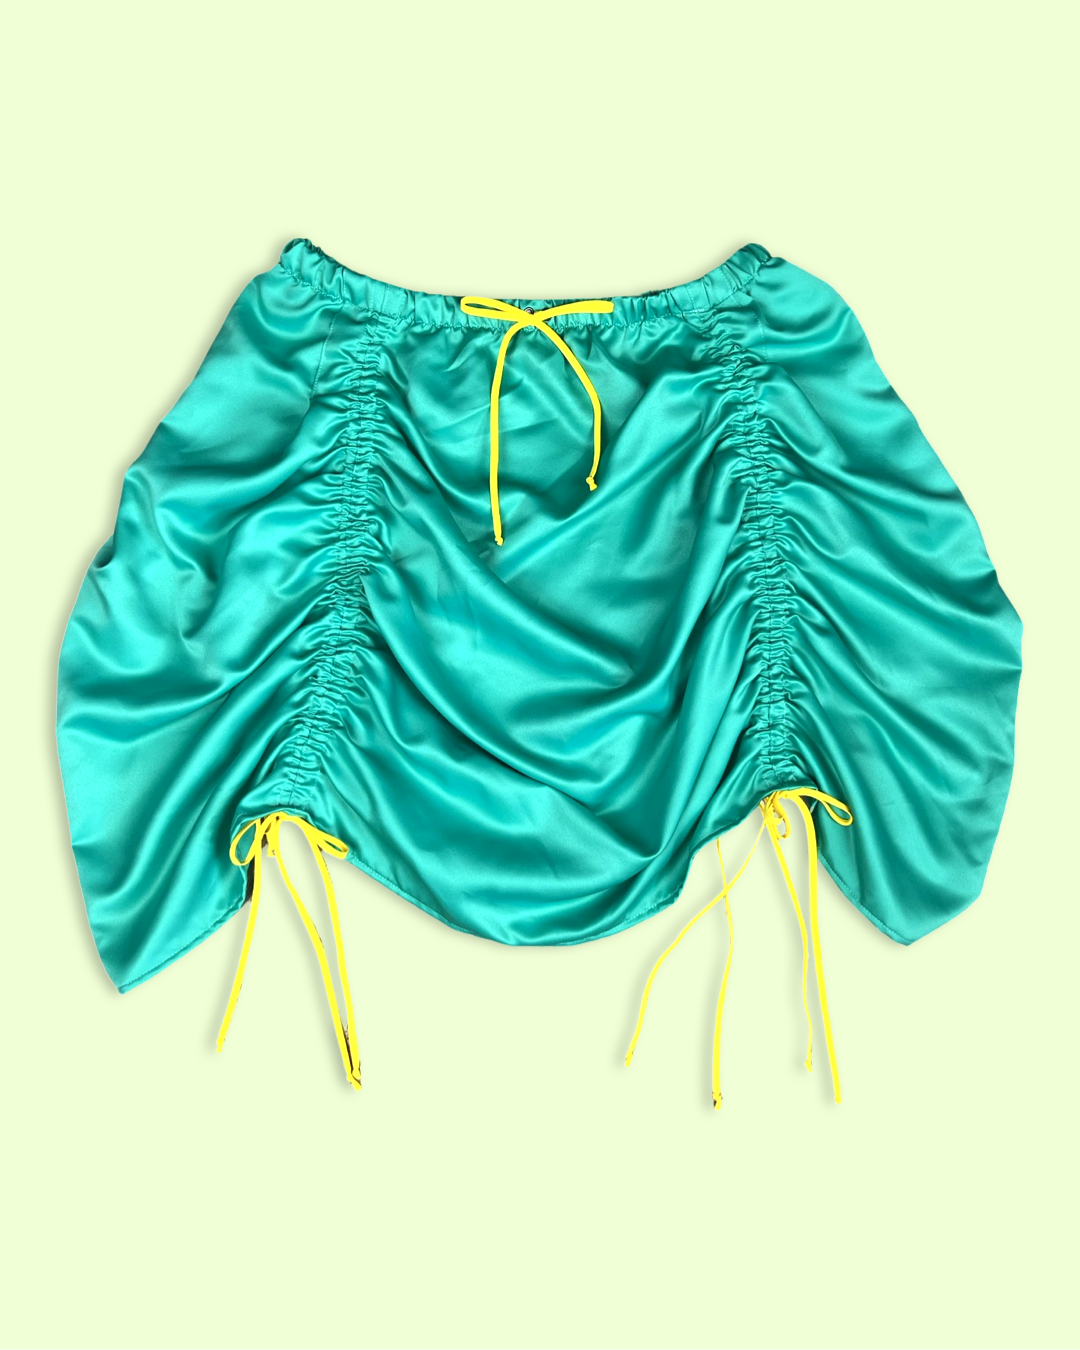 Teal/Yellow Parachute Skirt